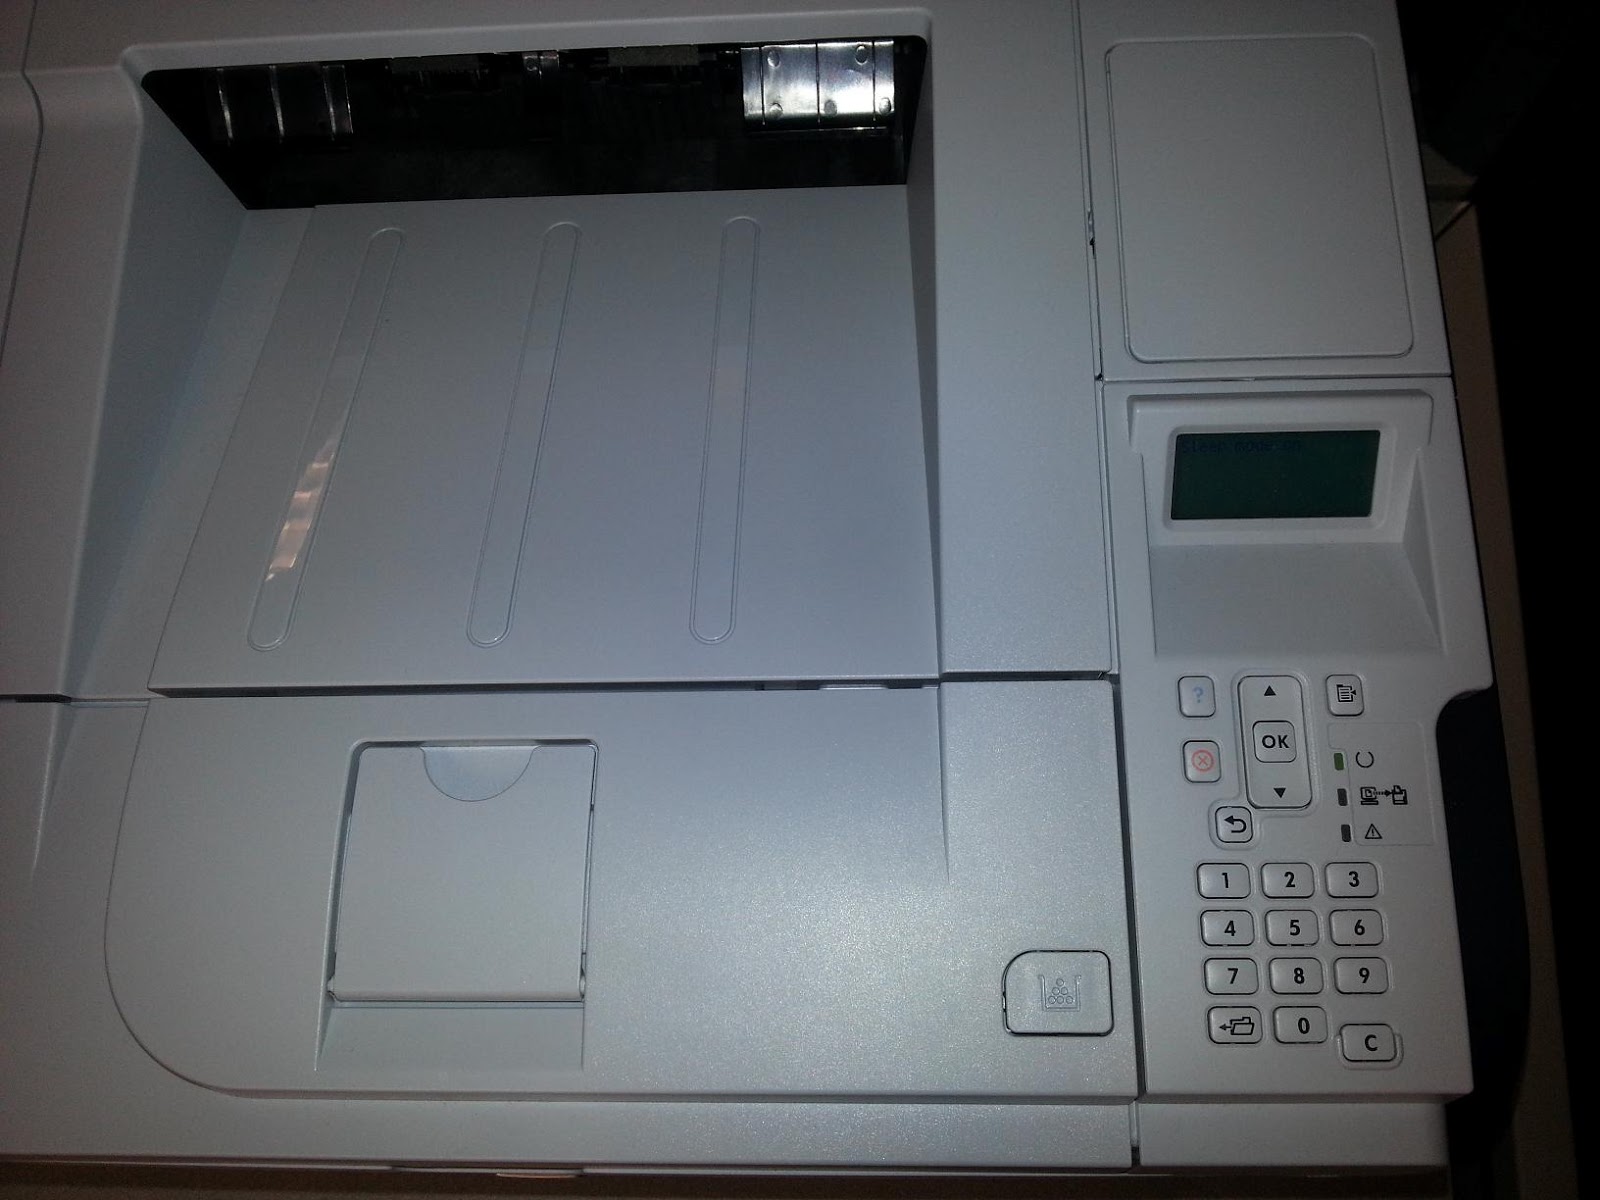 Hewlett Packard P3015: How to print a network configuration page Hewlett Packard P3015 printer